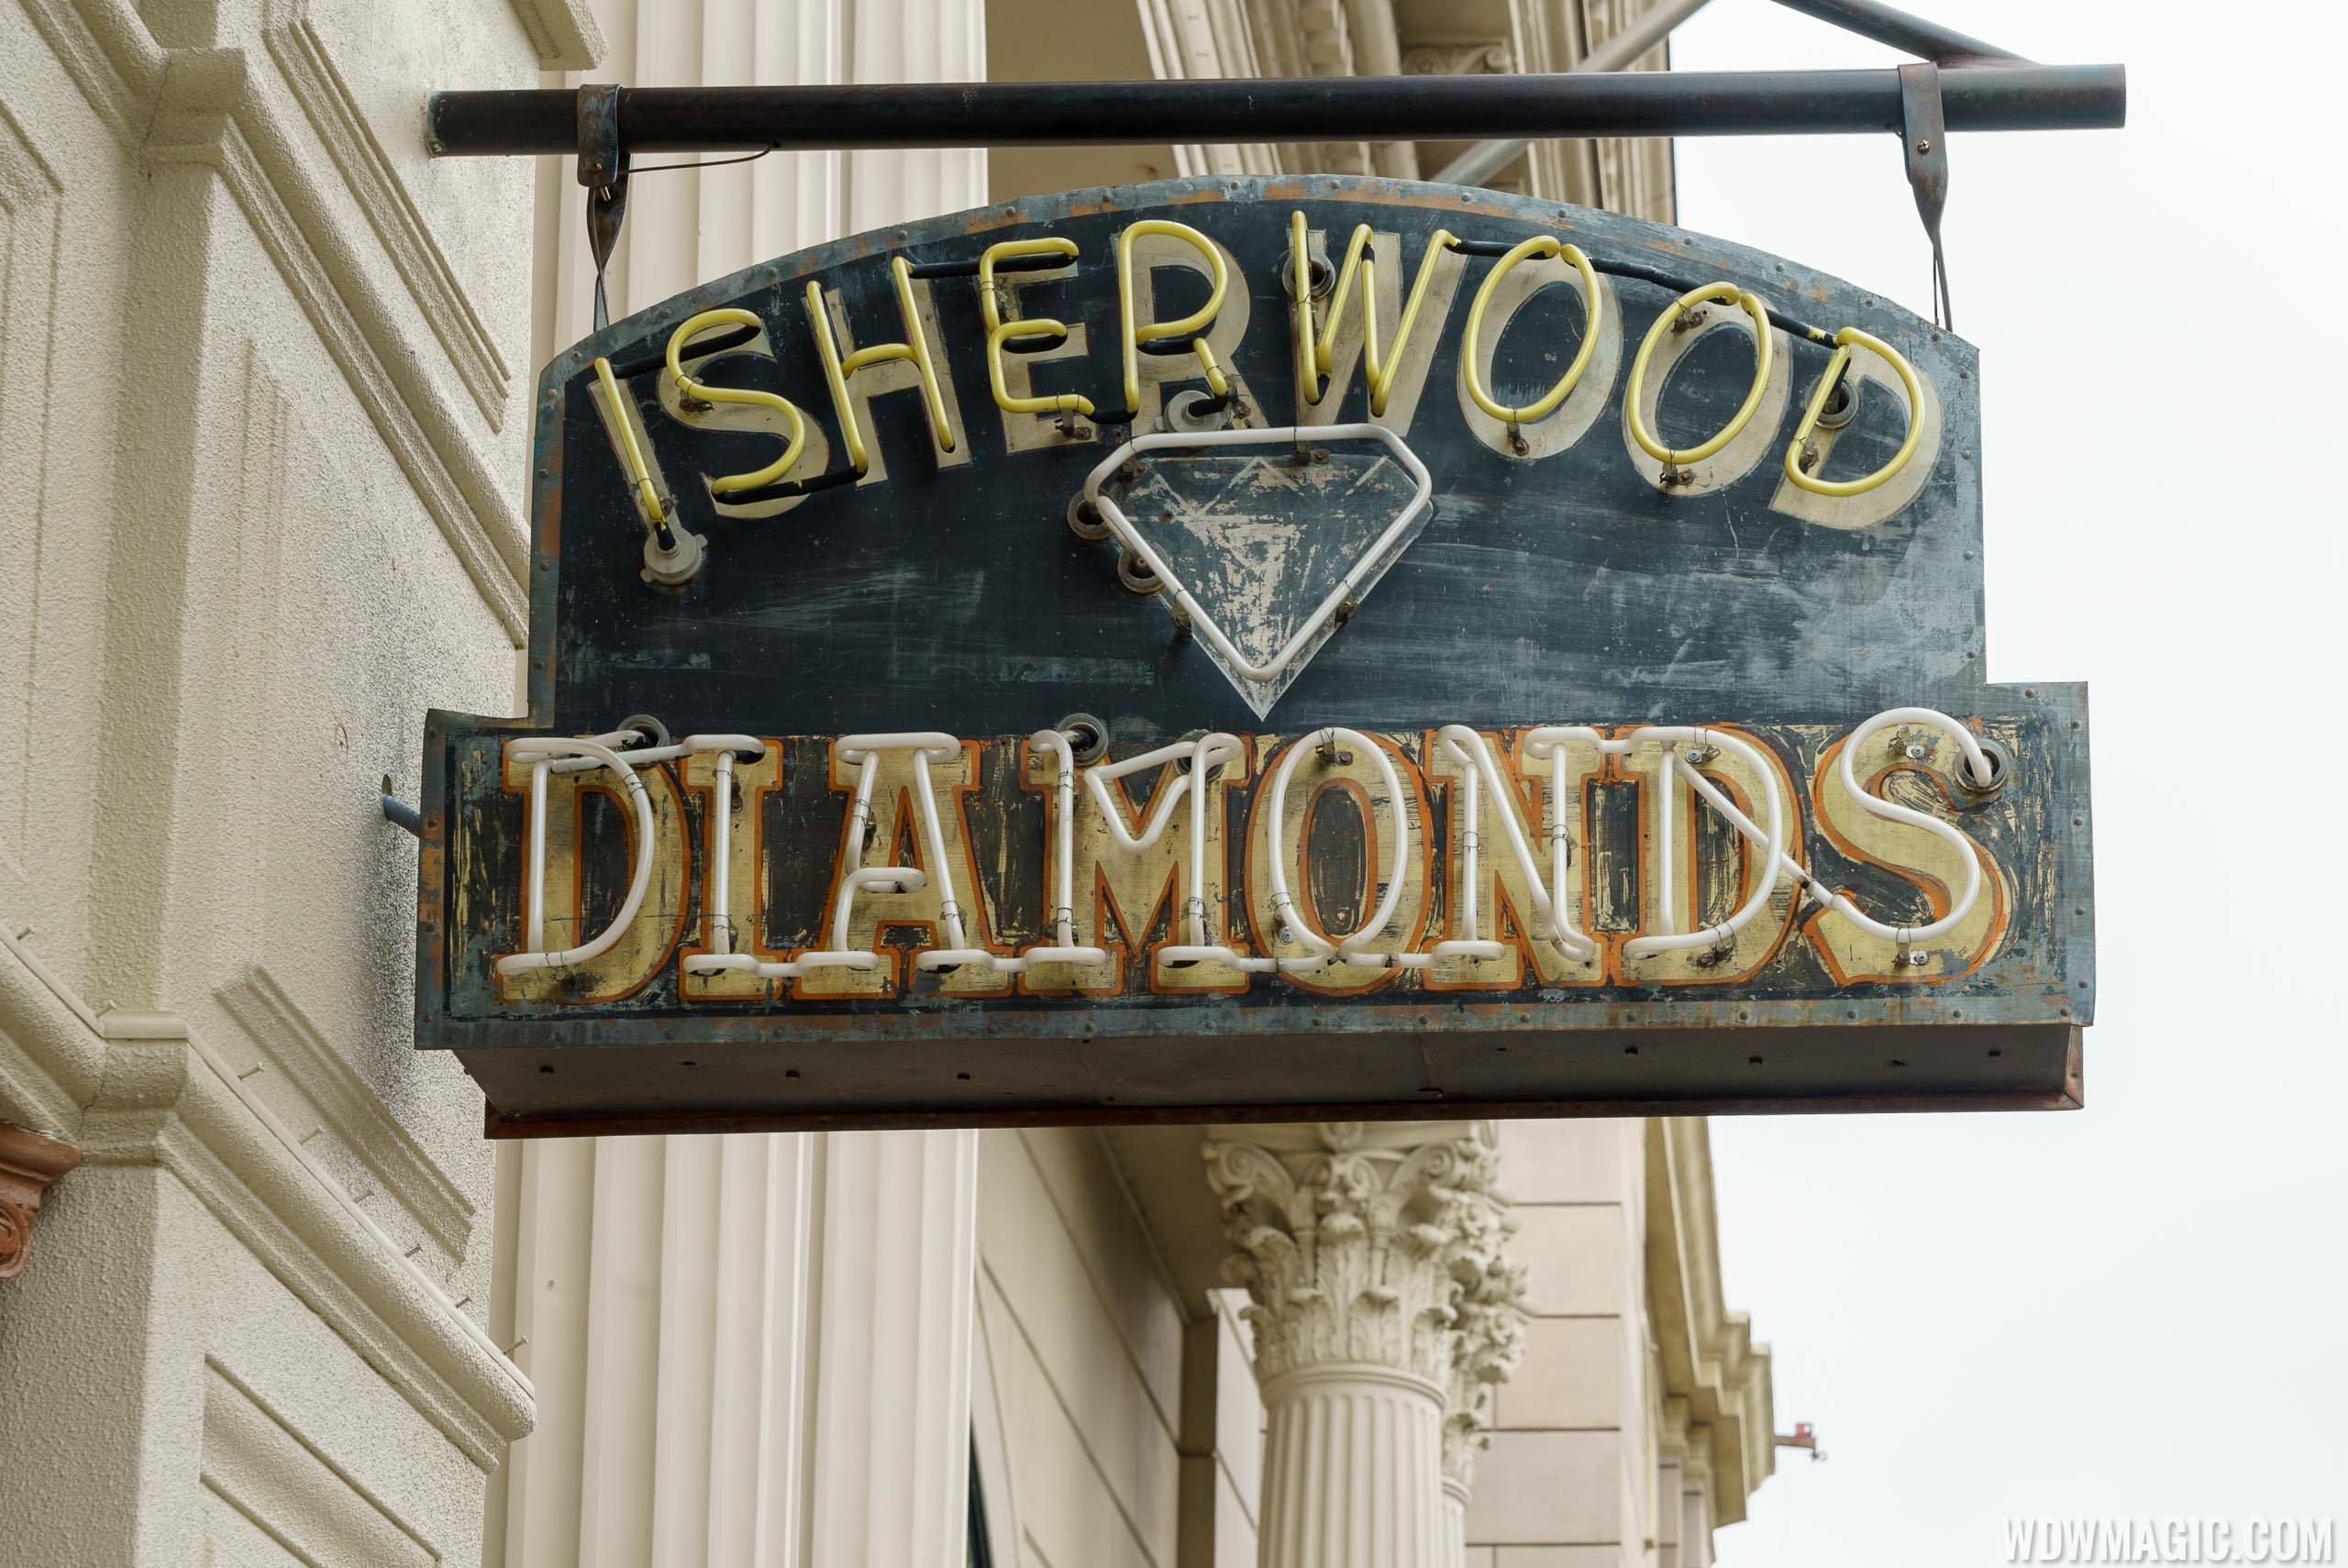 Streets of America facades - New York Isherwood Diamonds